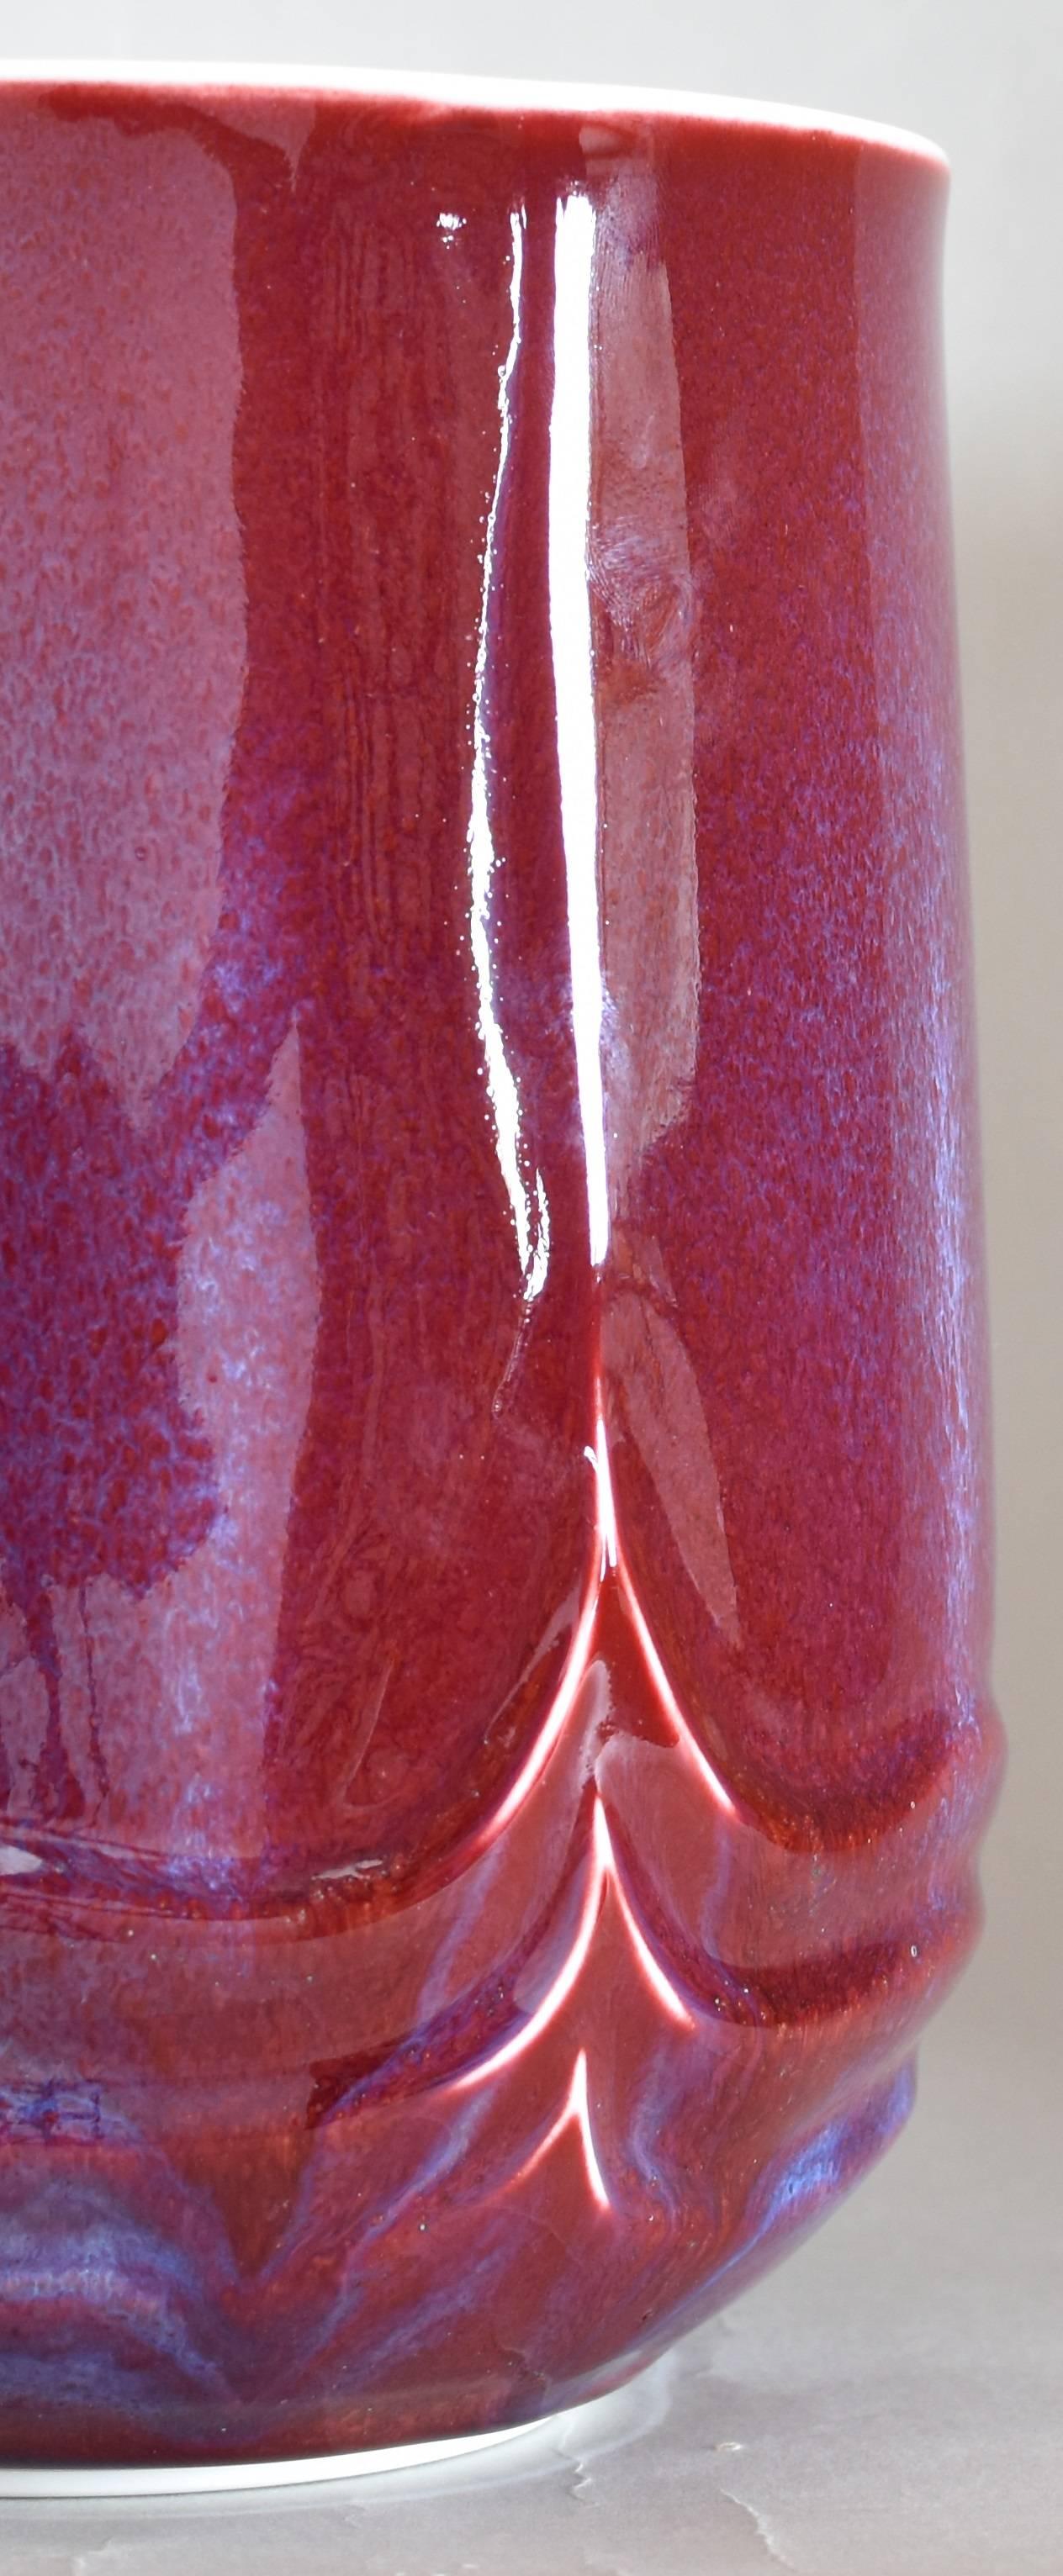 Contemporary Japanese Glazed Red Decorative Porcelain Vase by Master Artist